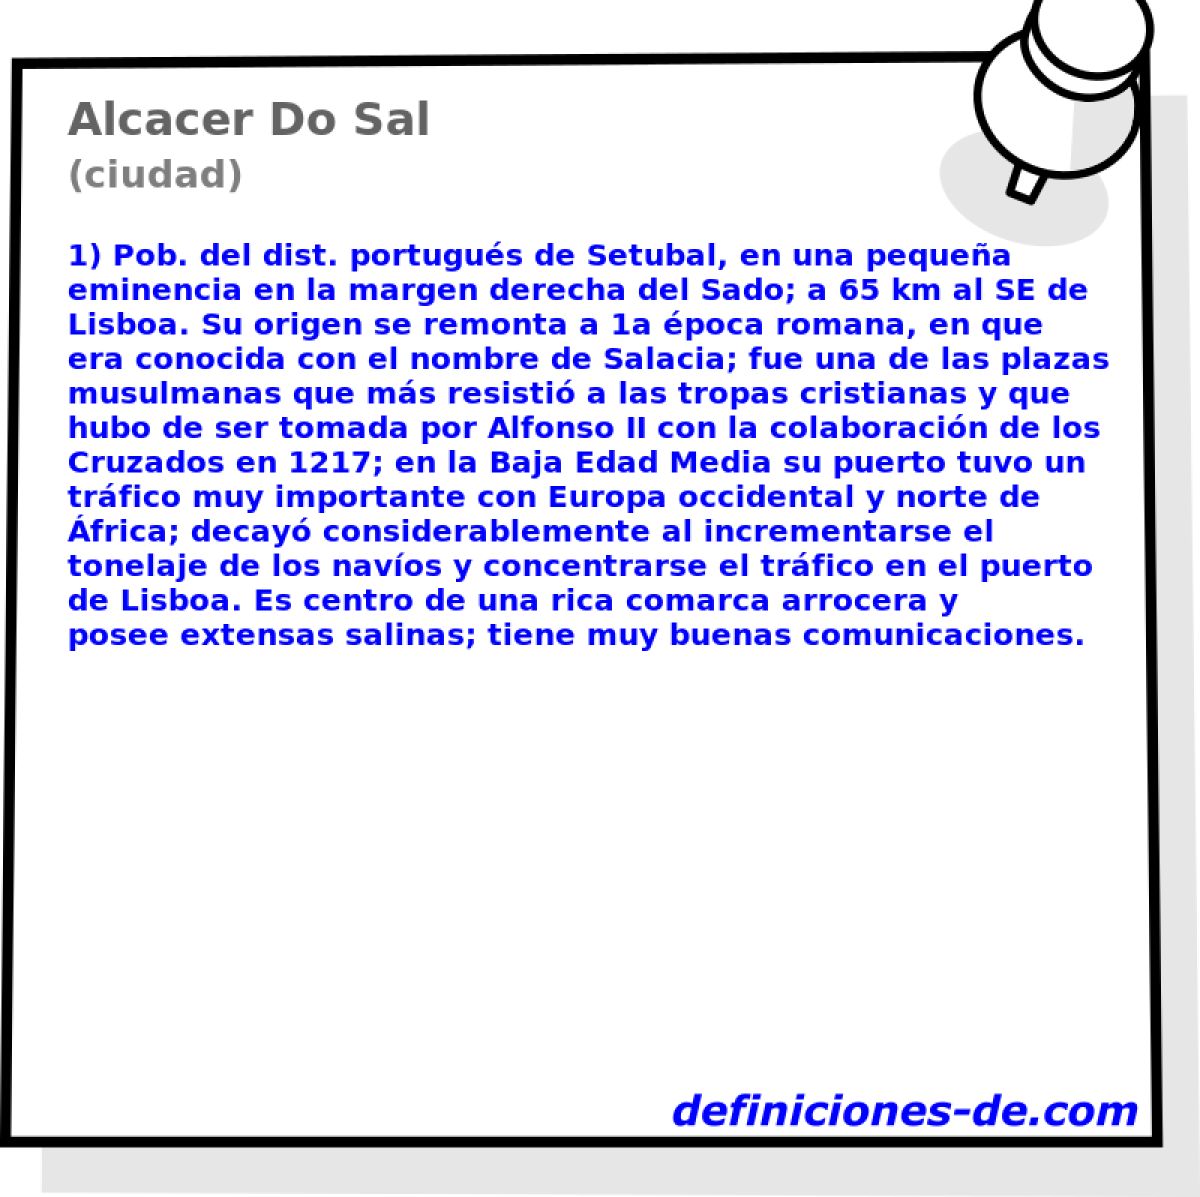 Alcacer Do Sal (ciudad)